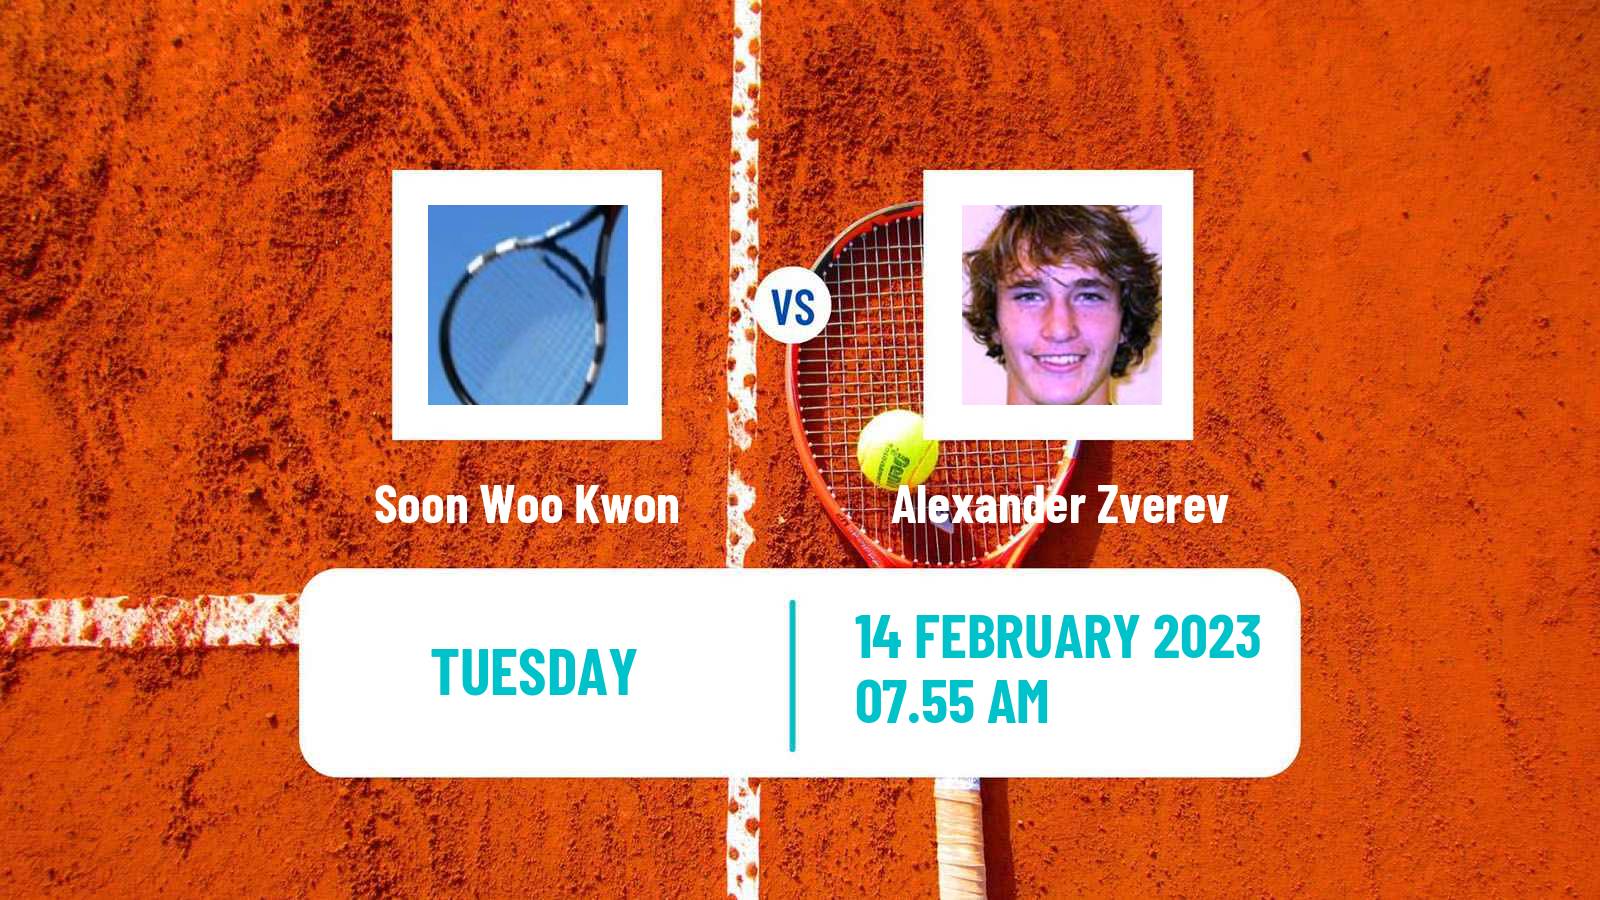 Tennis ATP Rotterdam Soon Woo Kwon - Alexander Zverev